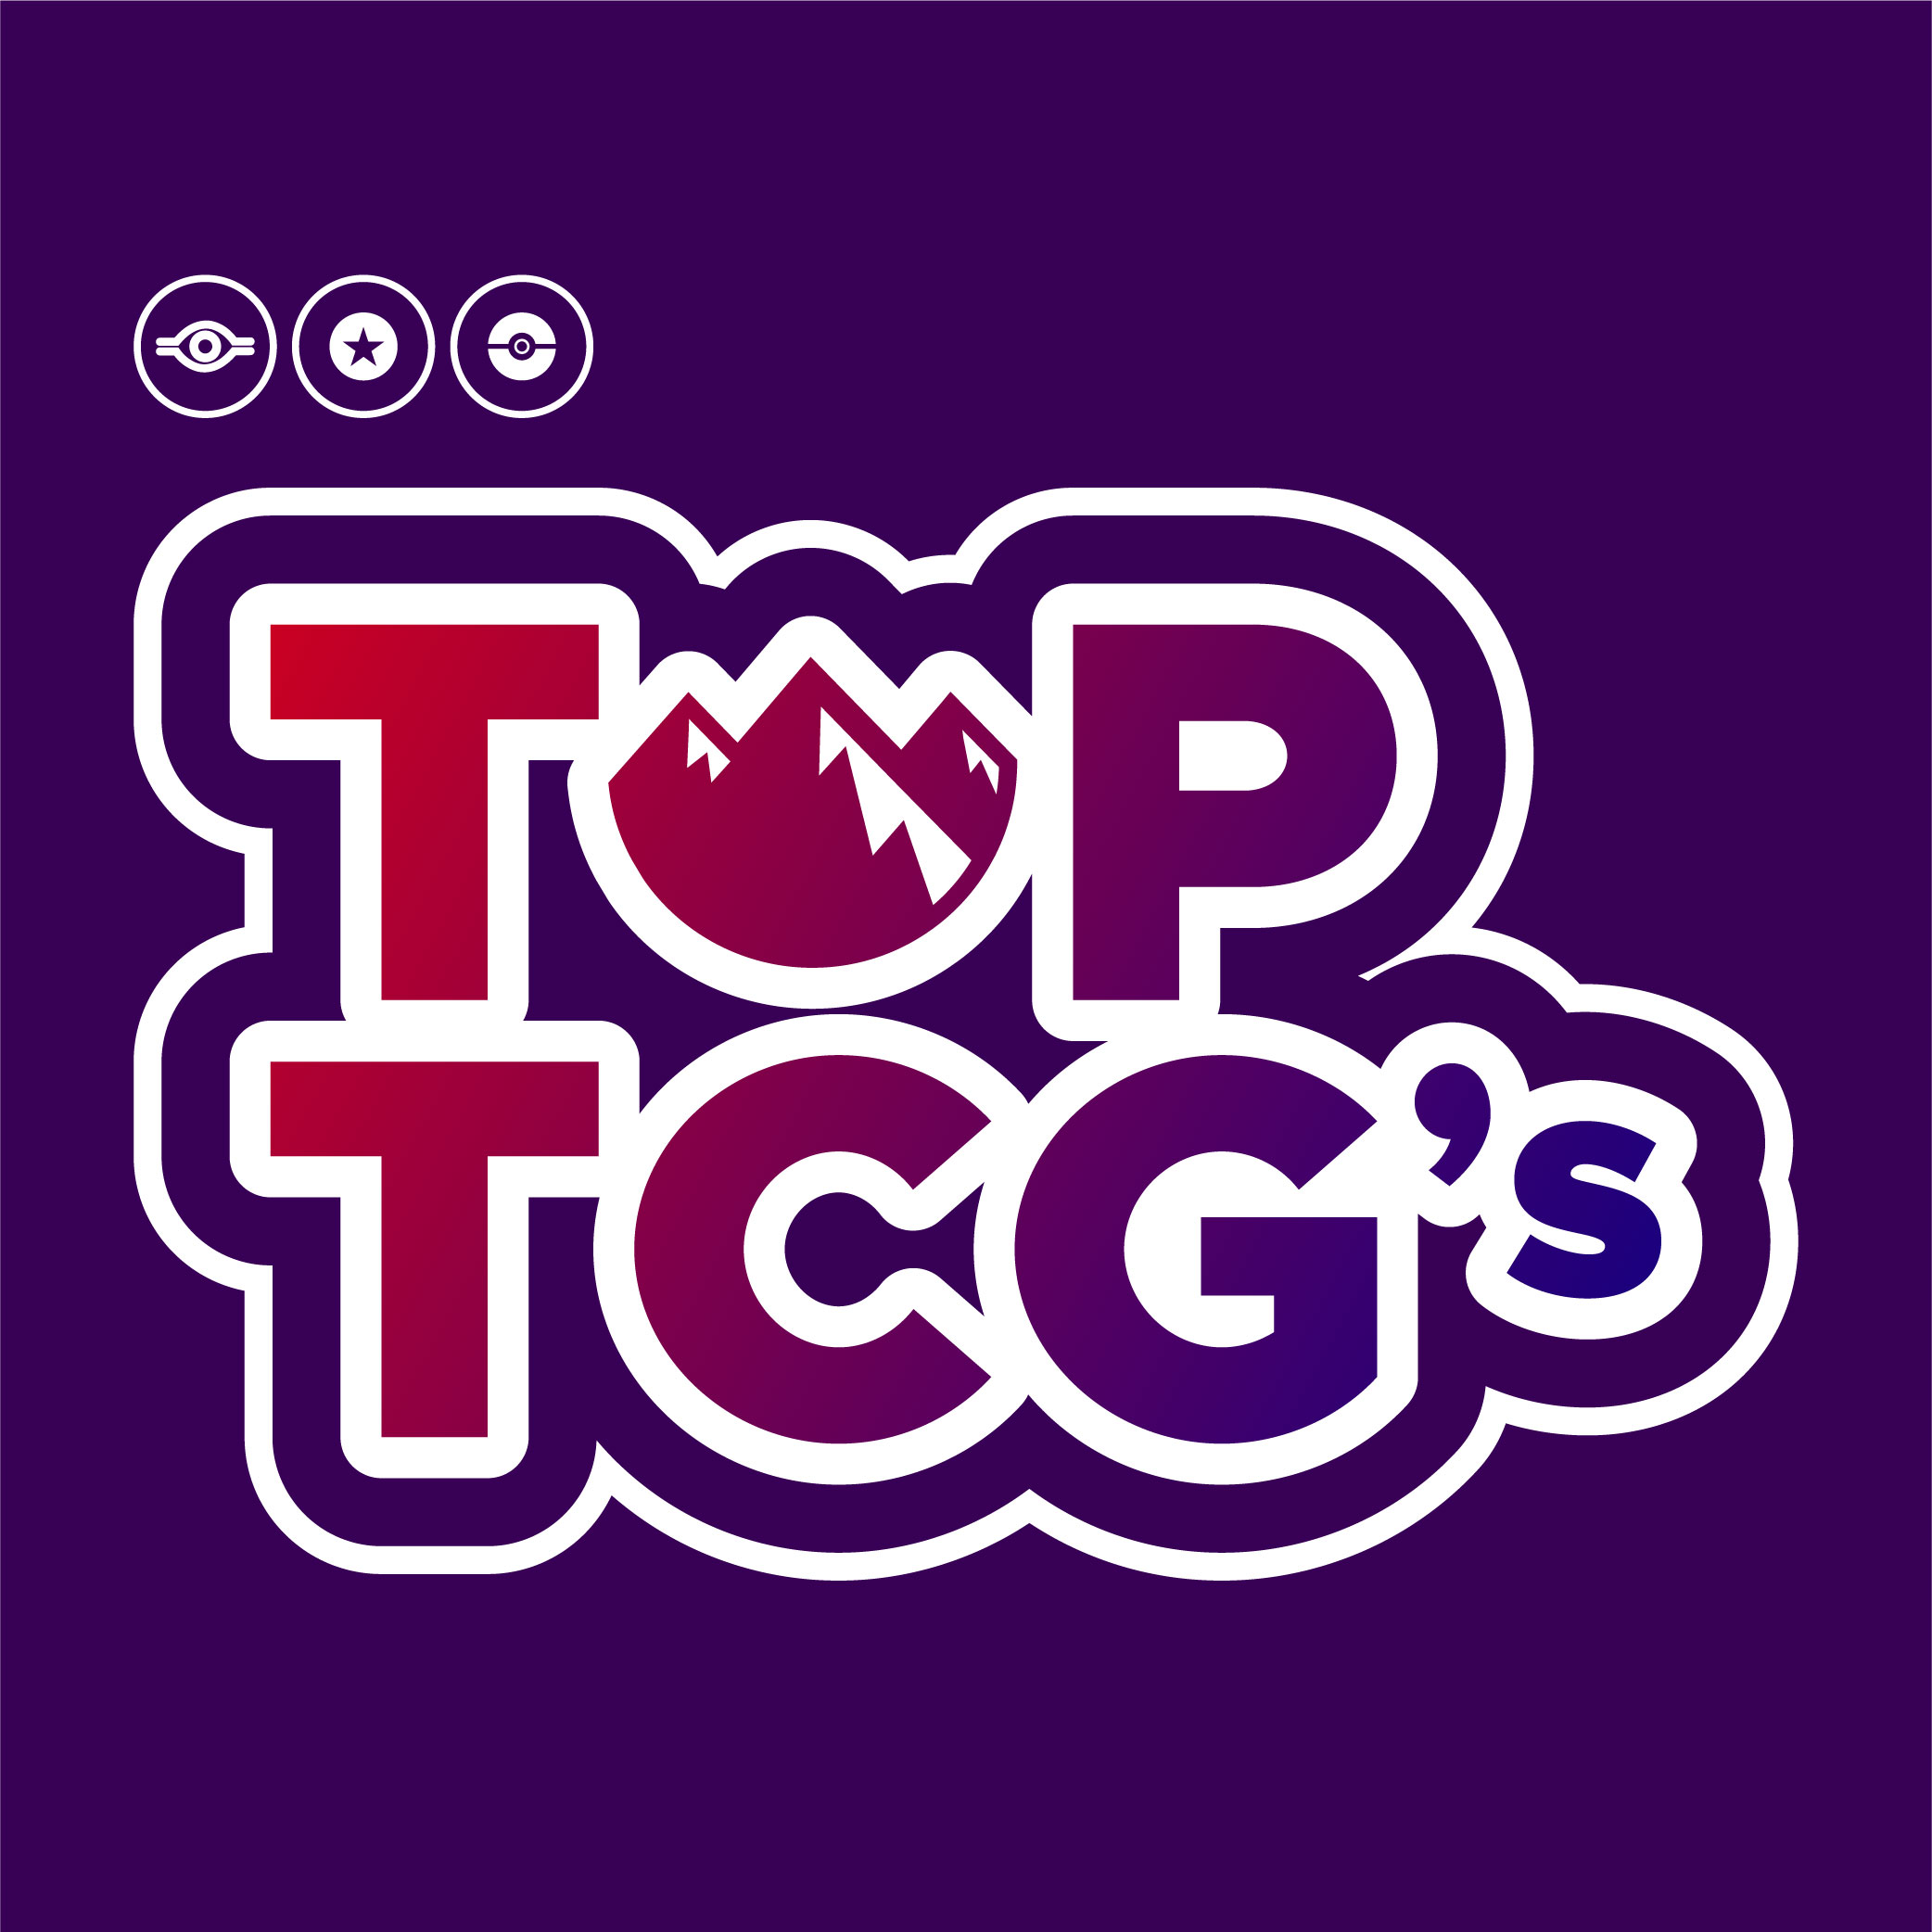 TOP TCGs logo versies-20